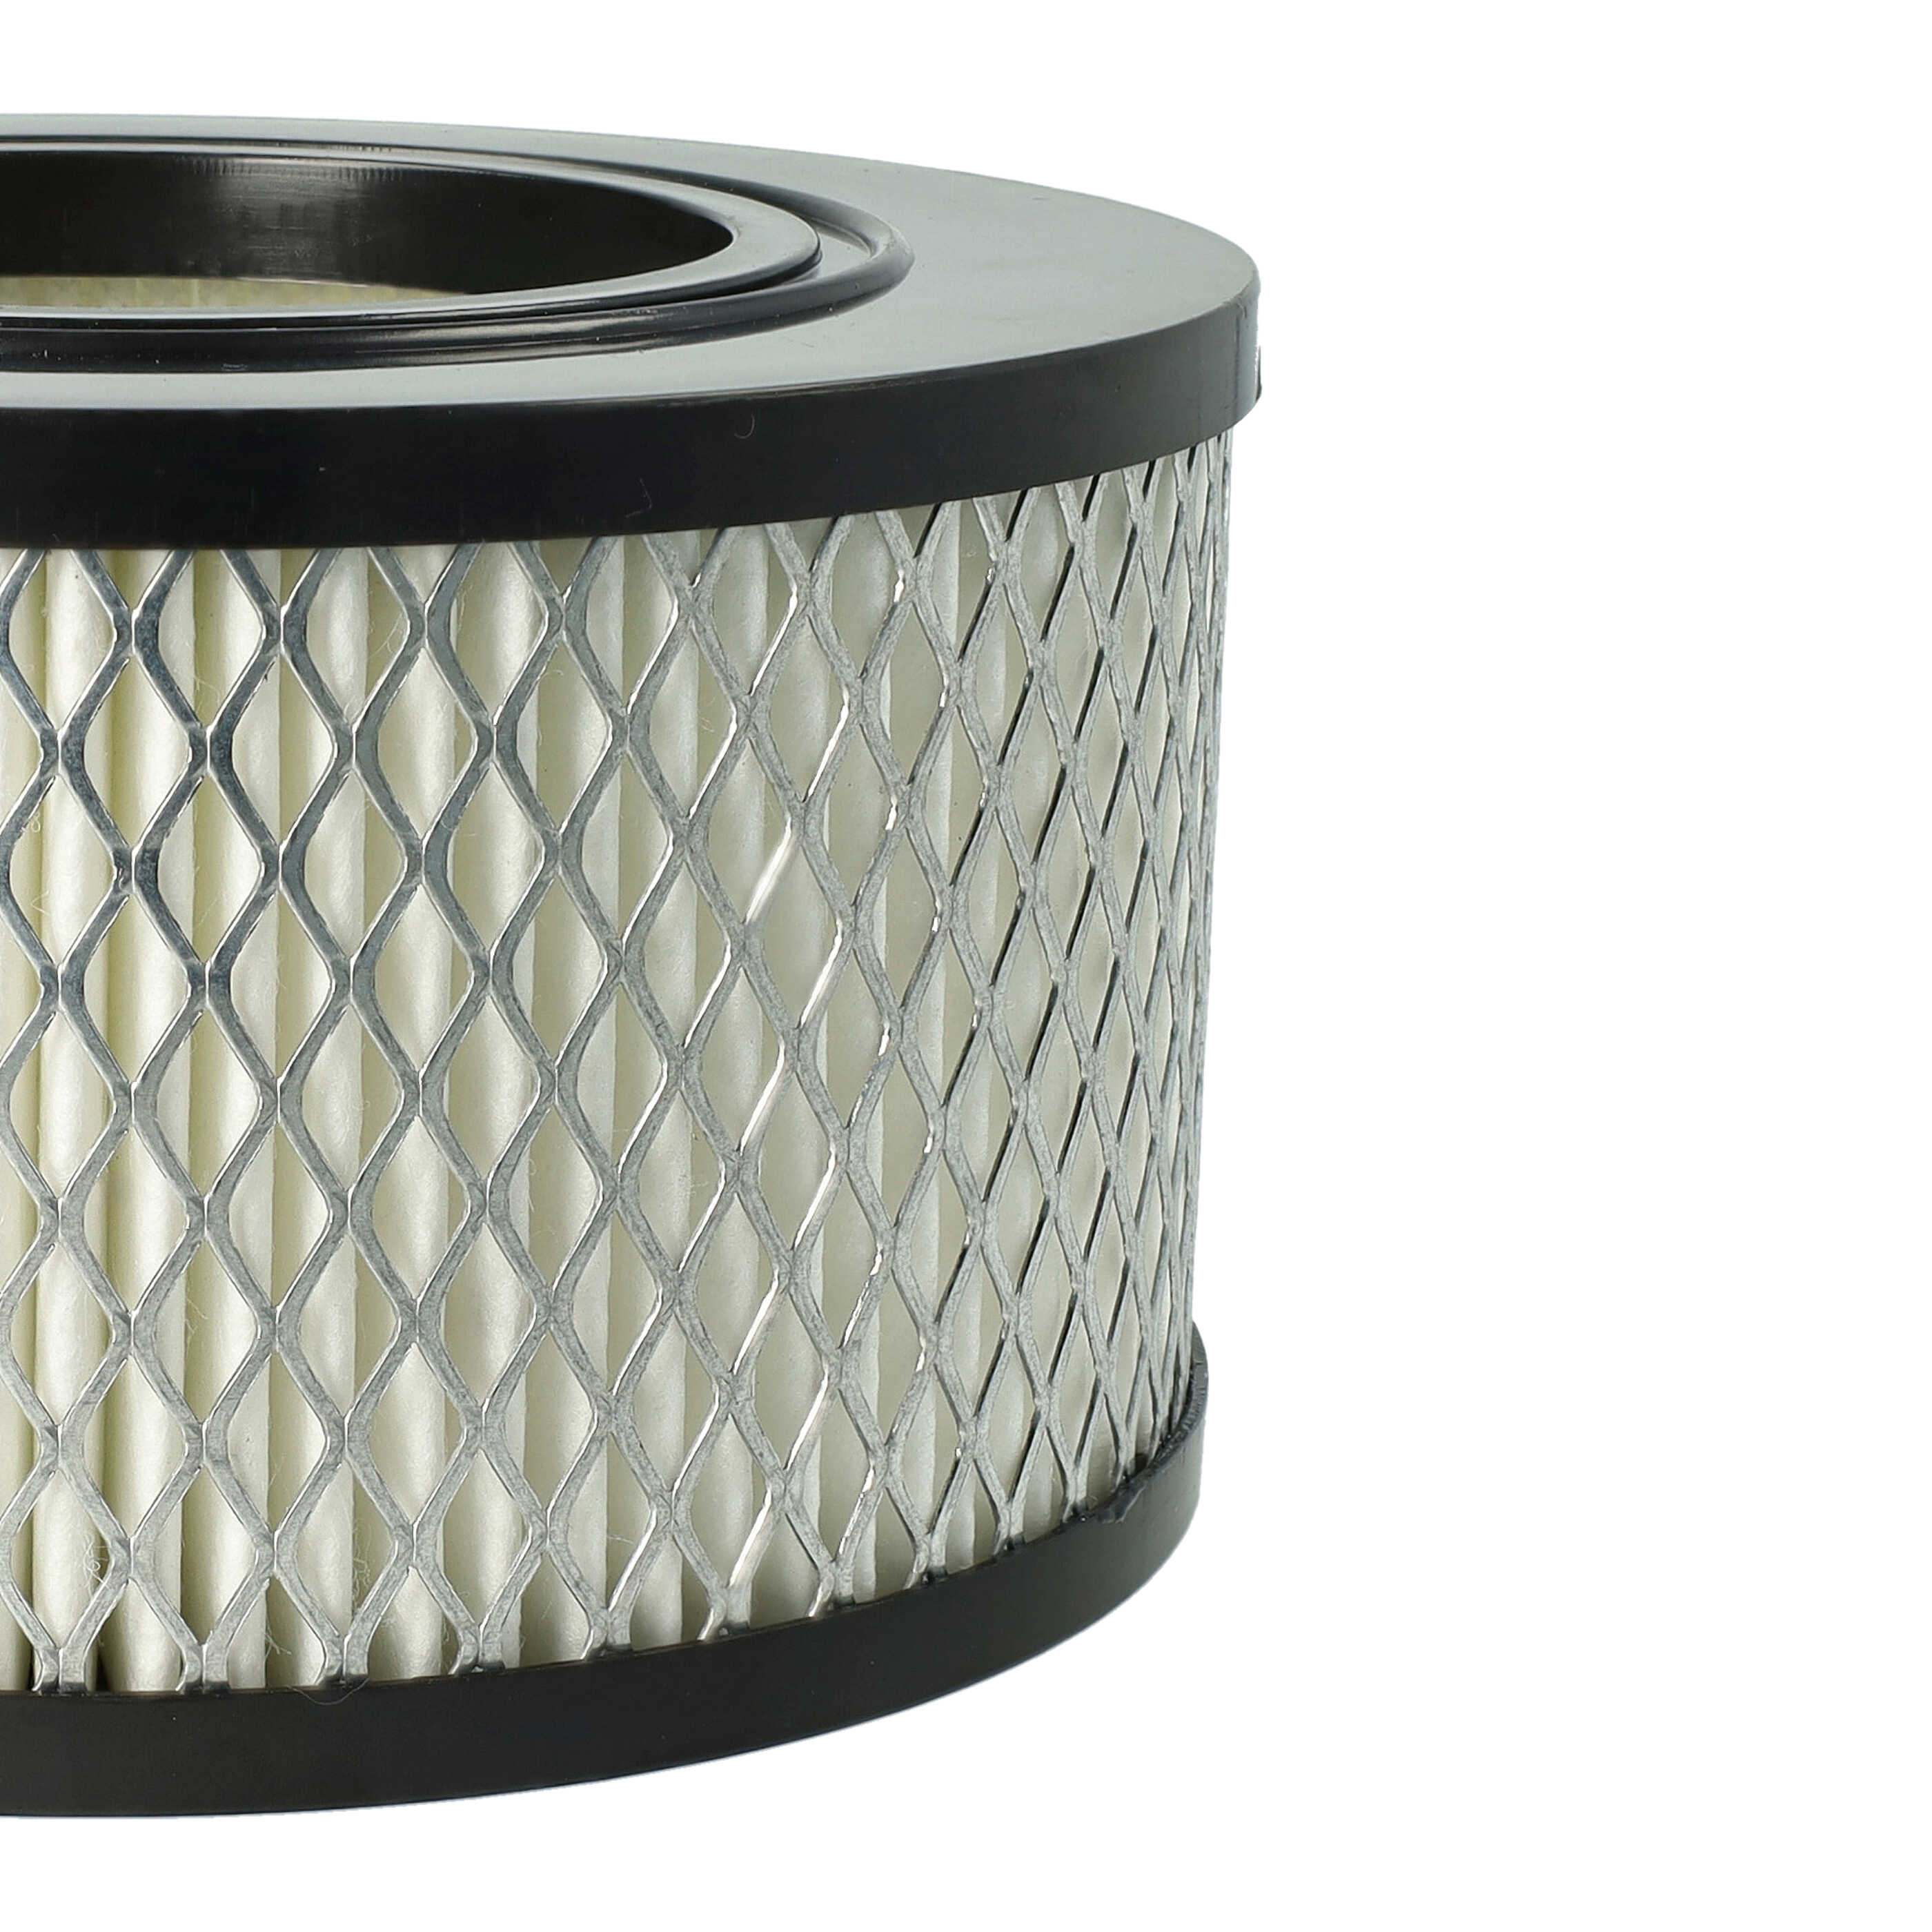 1x HEPA filter replaces Flex 445.126 for MirkaVacuum Cleaner, filter class H-asbestos